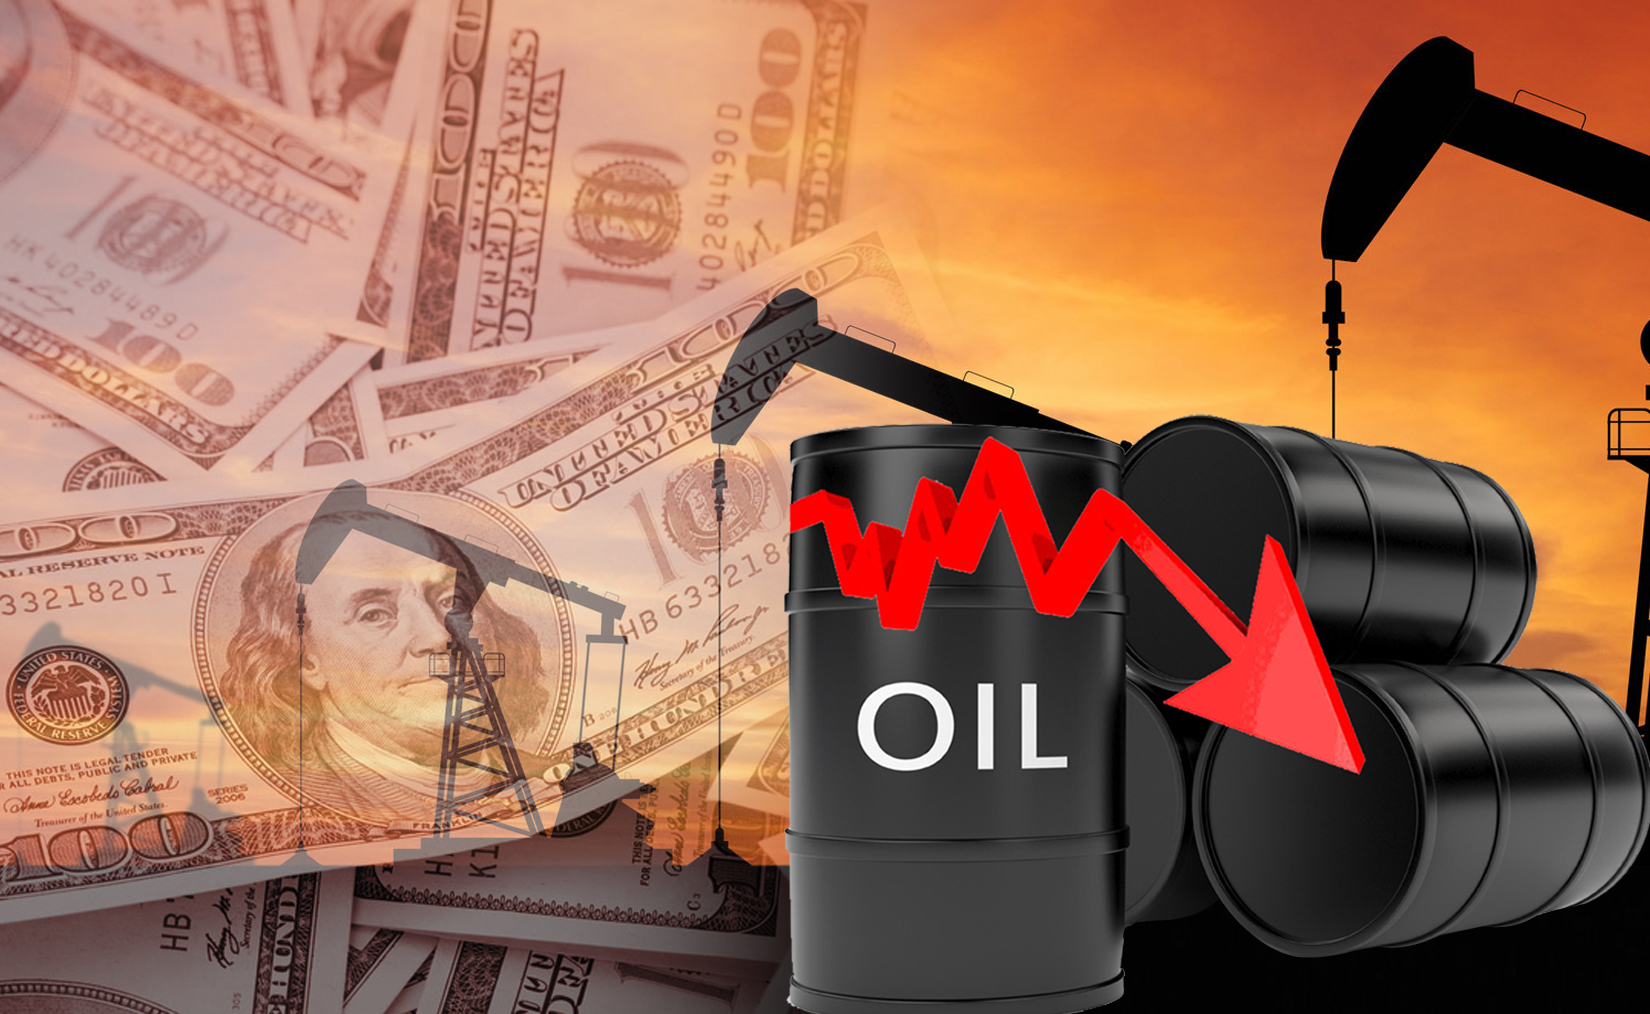 Kuwait oil price down 73 cents to USD 55.92 pb